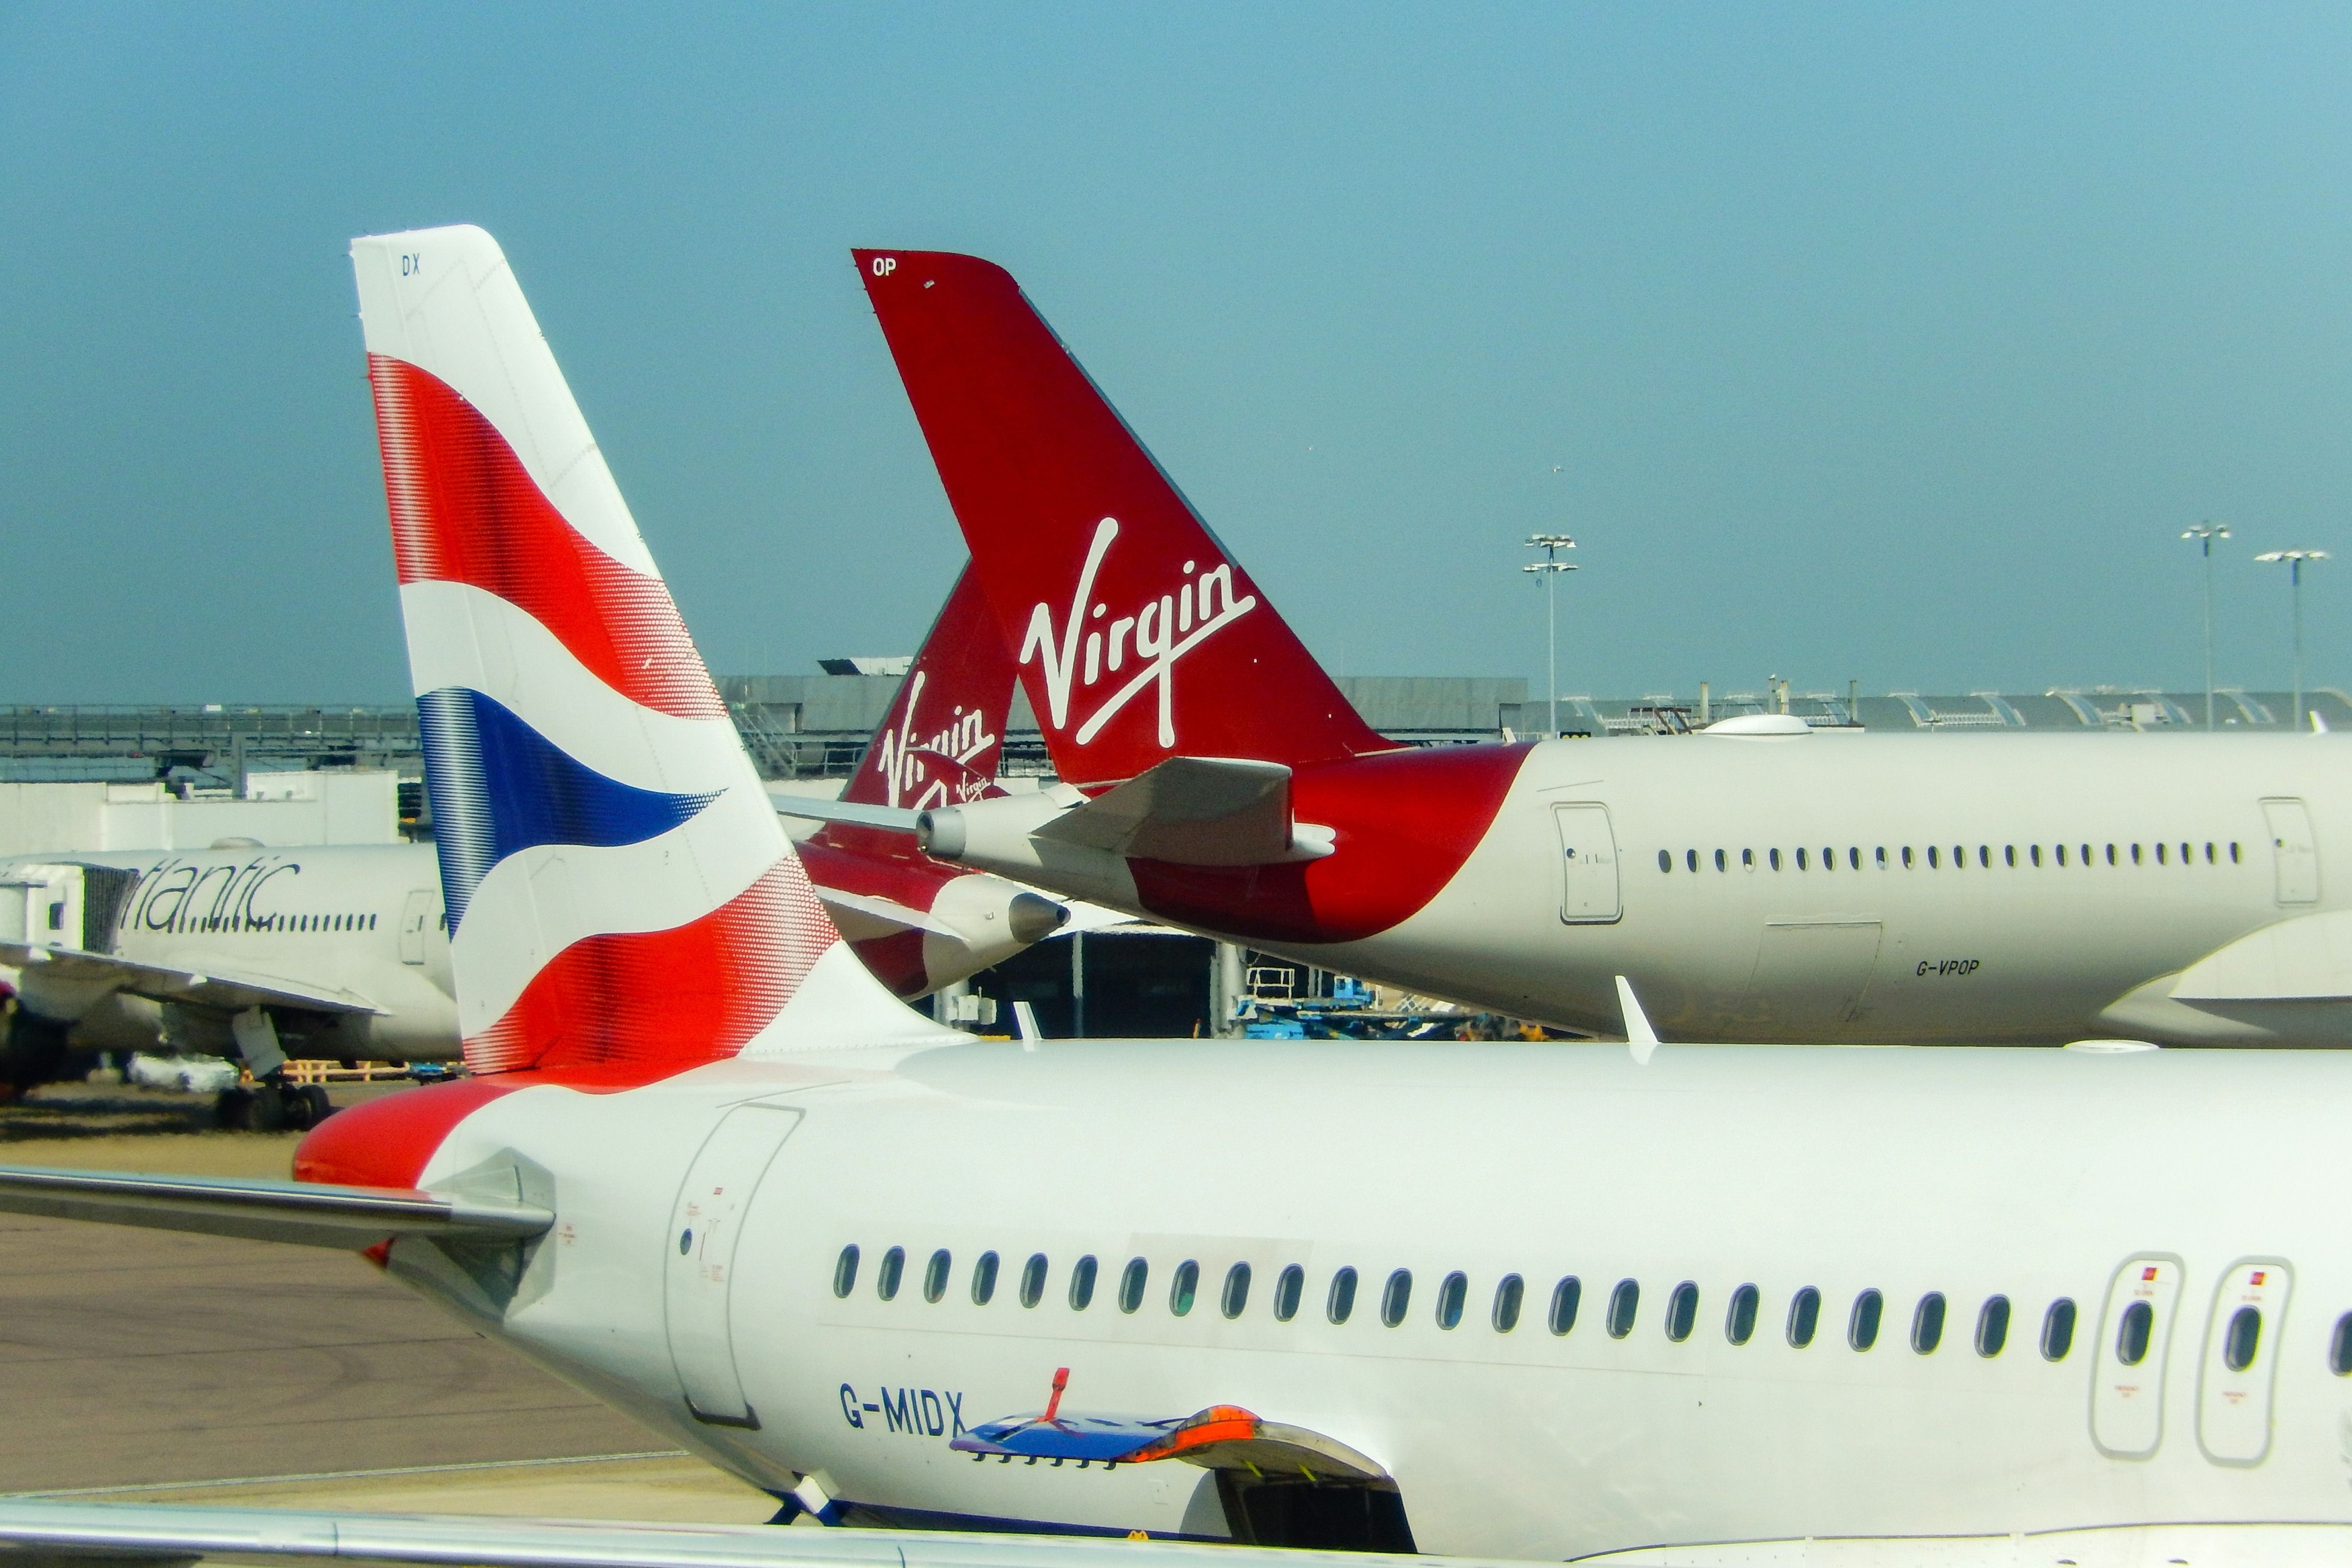 Aircraft tails of British Airways and Virgin Atlantic. 